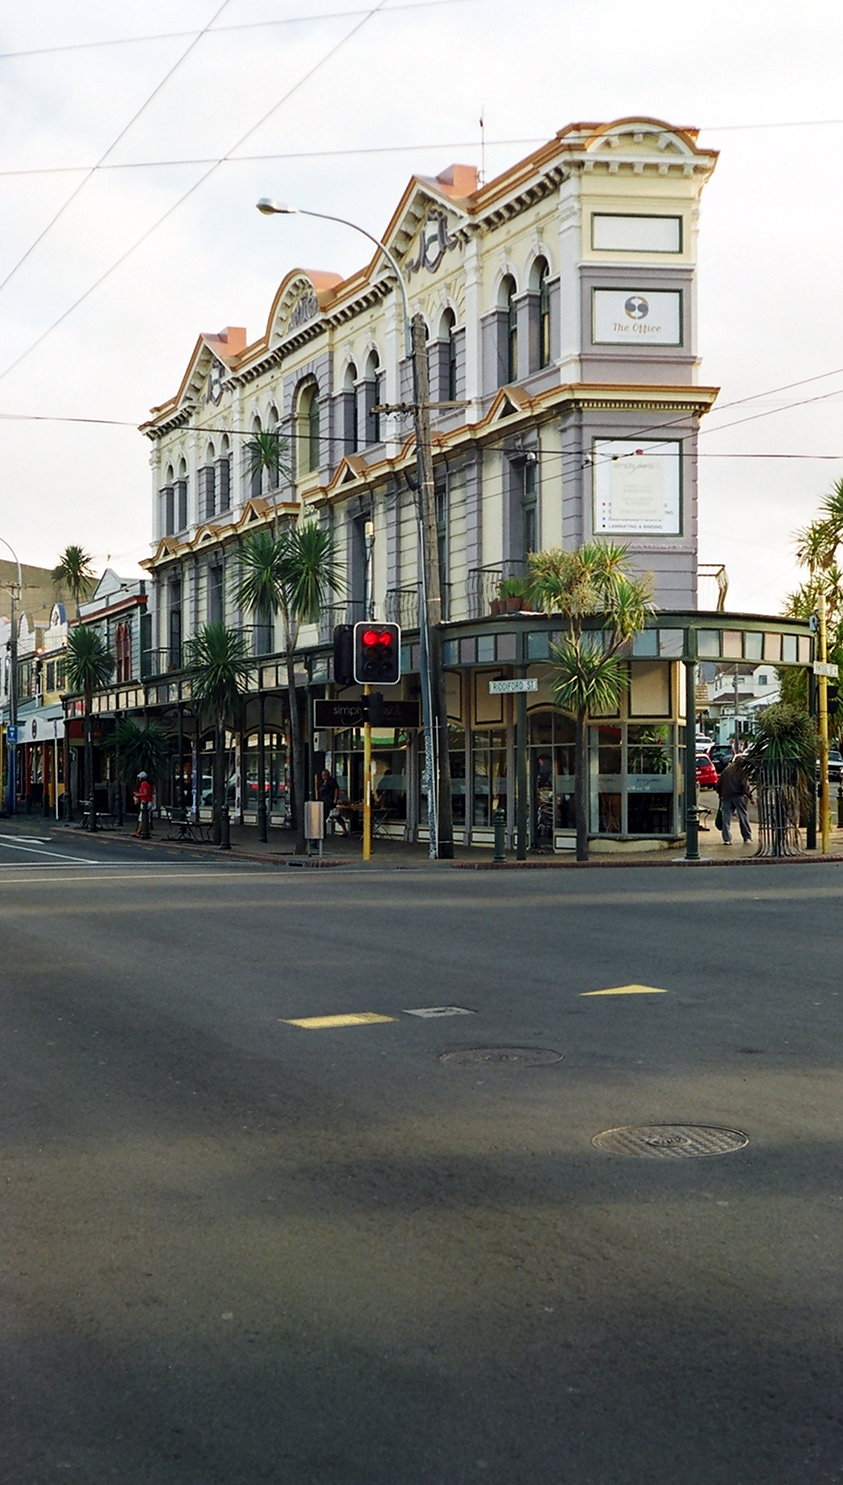 fotka / image Riddiford St v Newtownu
, prvn dvojrole film prohnan Yashicou M - Wellington, NZ